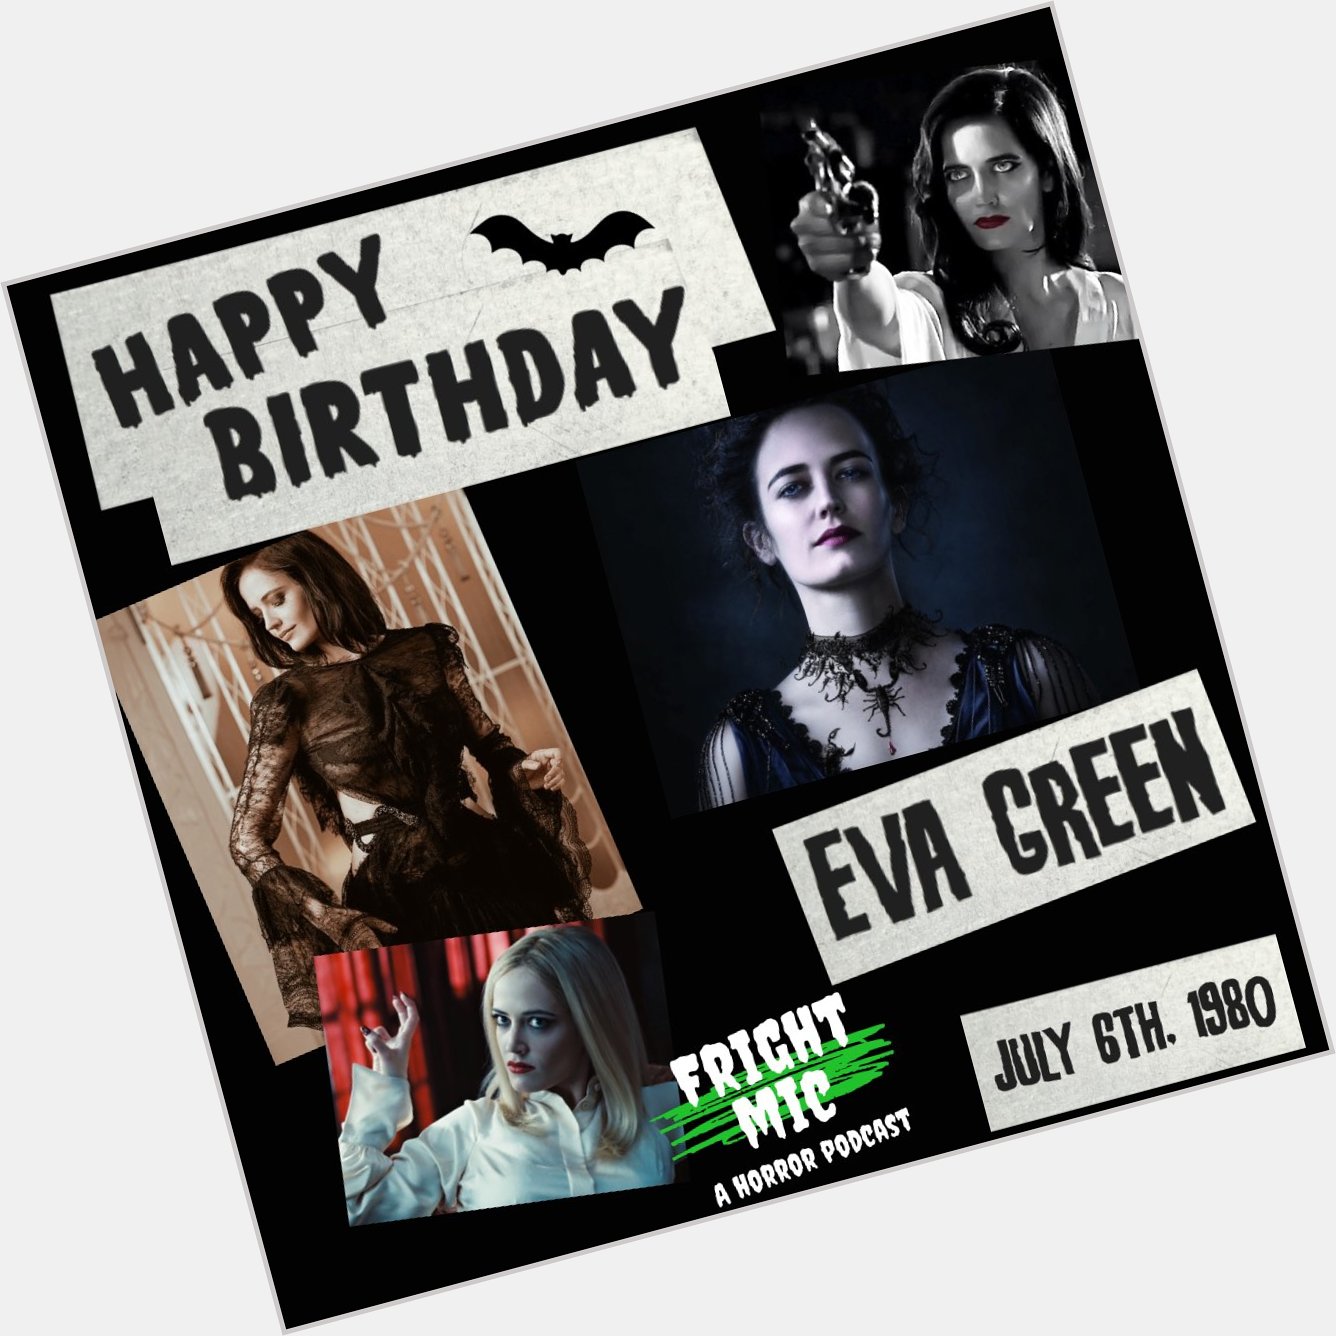 Happy birthday to EVA GREEN-born in 1980 